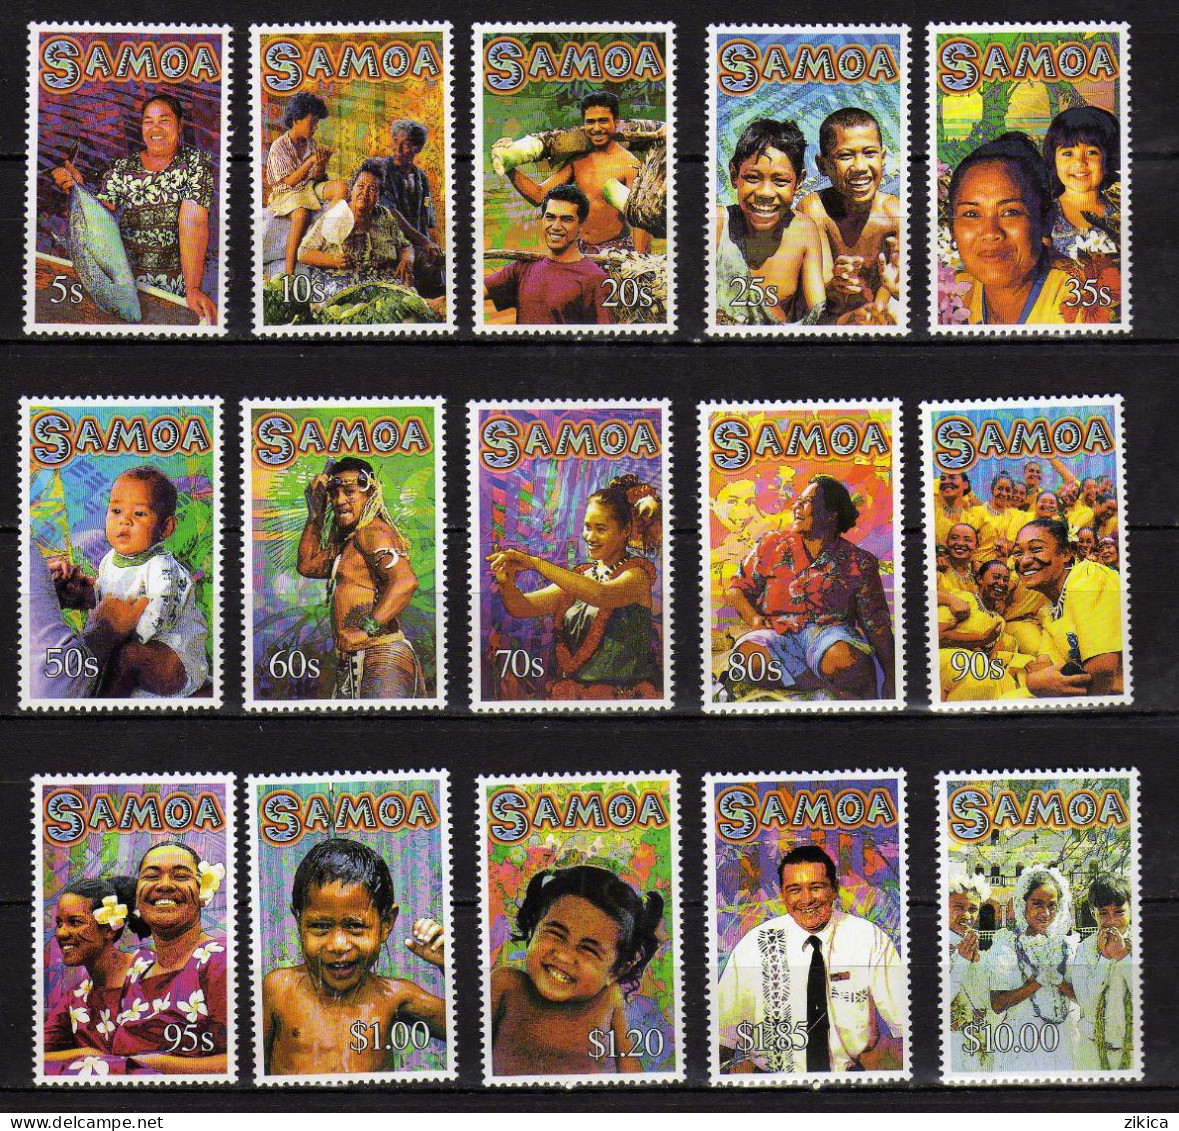 Samoa - 2002 Local Life.FACES OF SAMOA FULL SET OF 15 Stamps. MNH** - Samoa